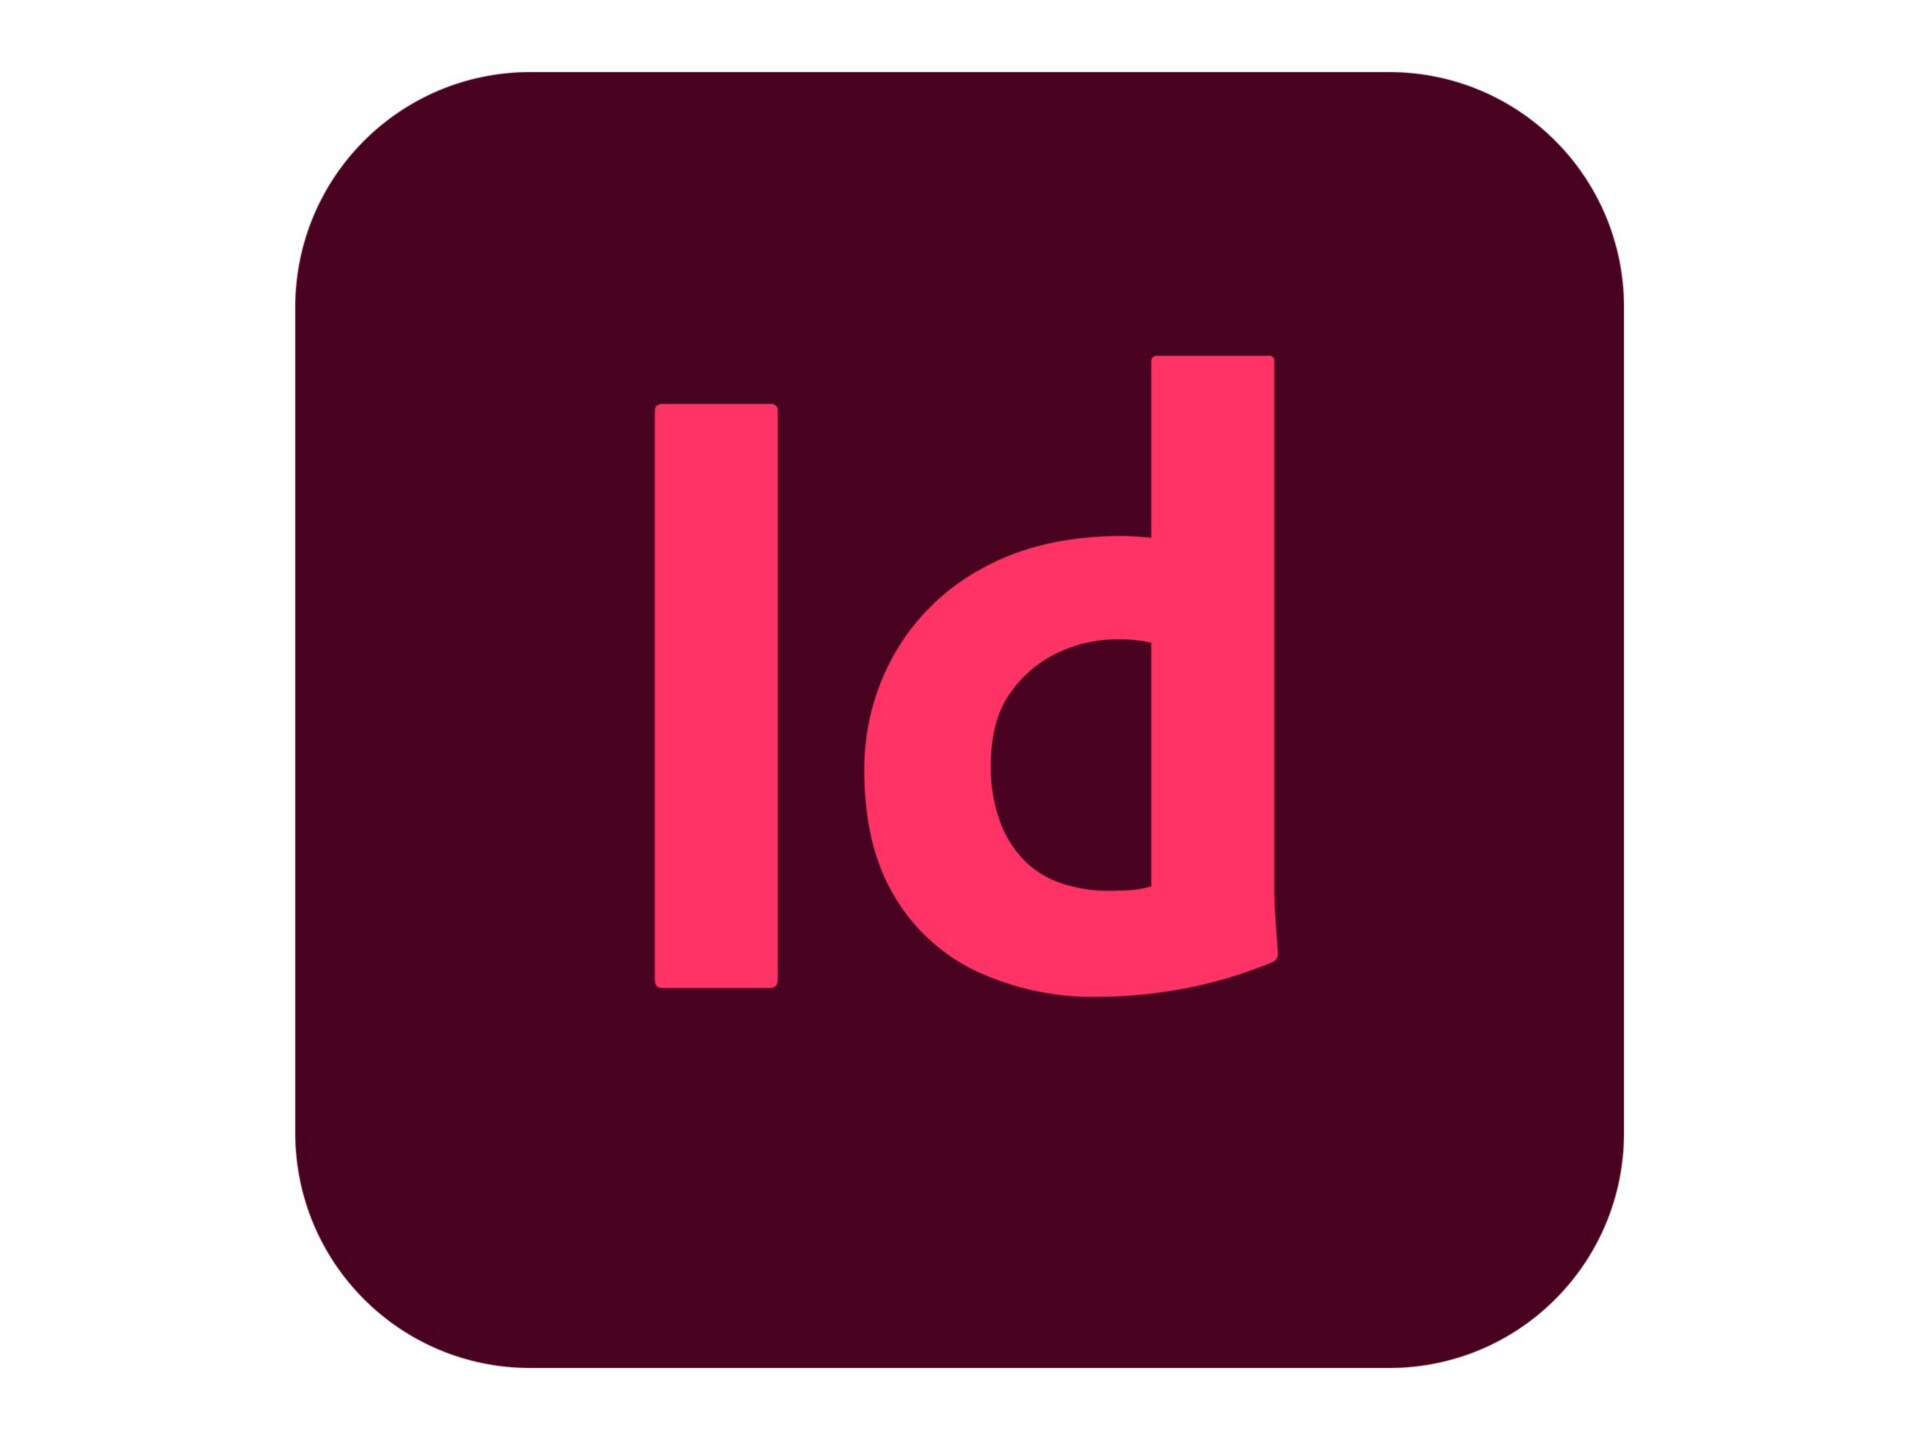 Adobe InDesign CC for Enterprise - Subscription New (7 months) - 1 named user